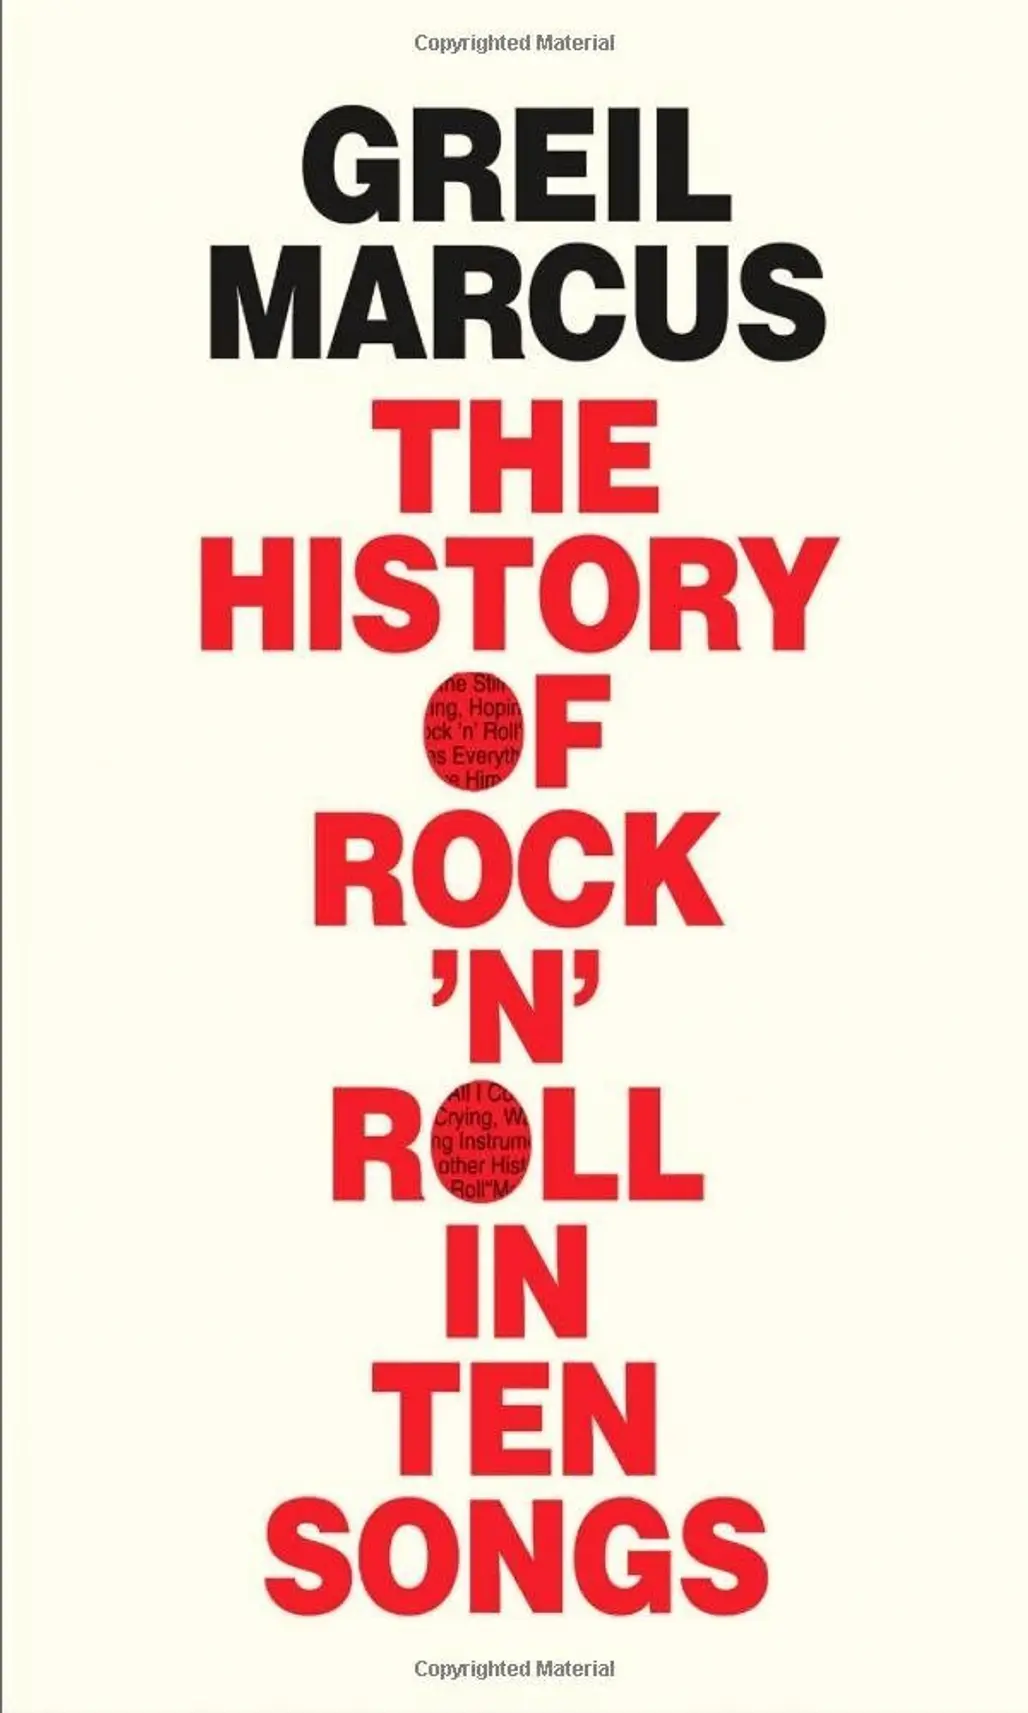 The History of Rock 'n' Roll in Ten Songs by Griel Marcus